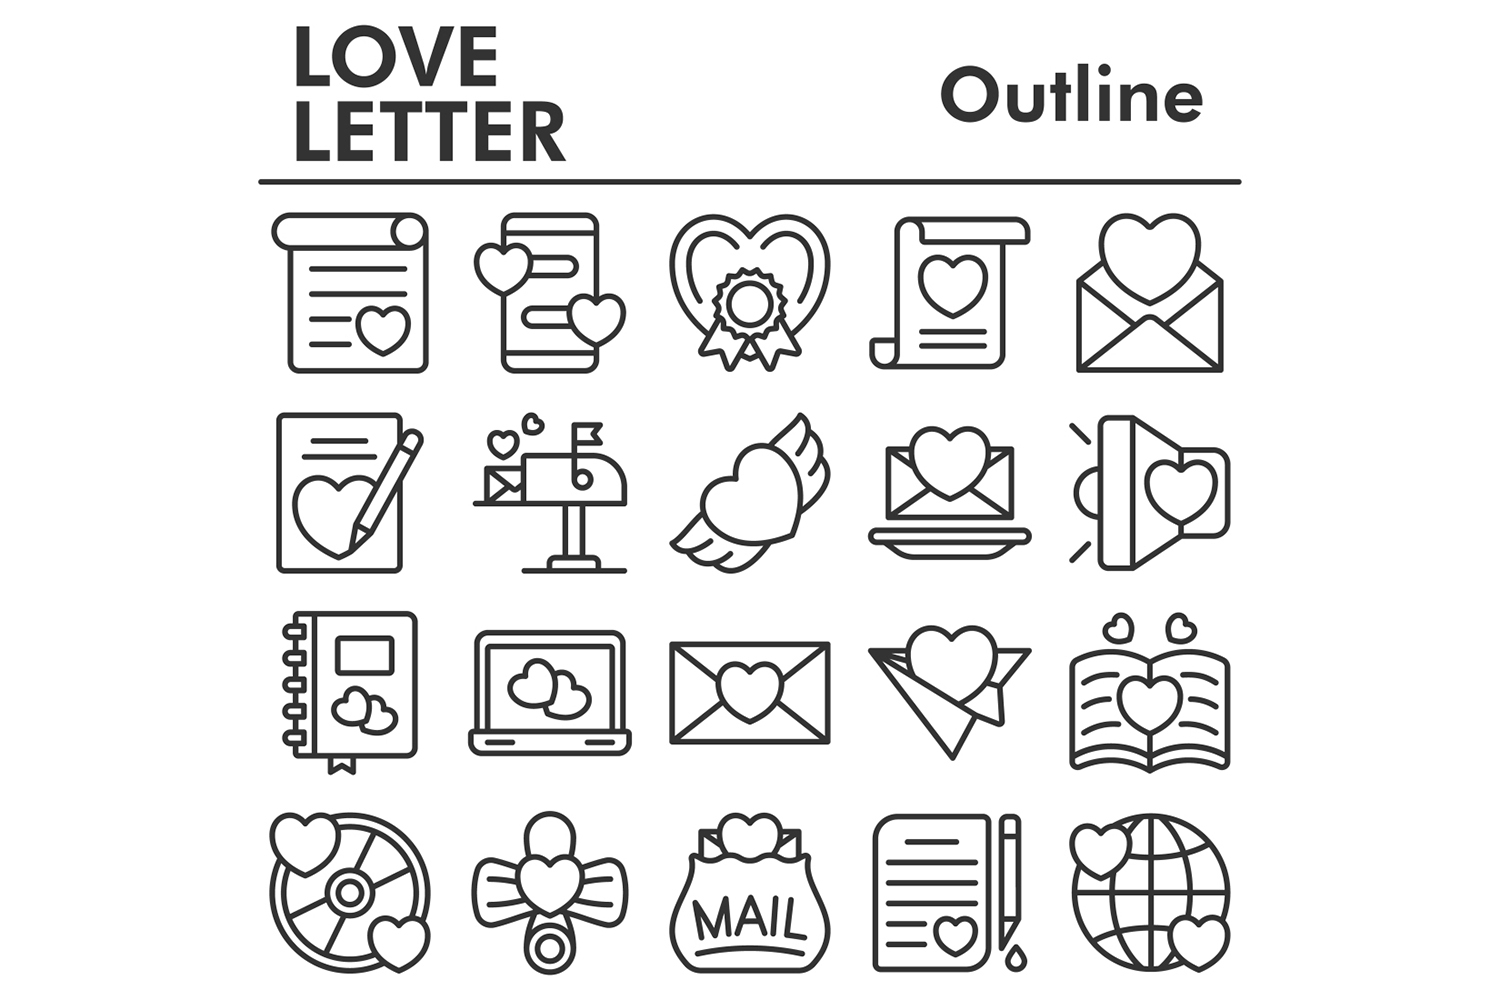 Love letter icons set pinterest preview image.